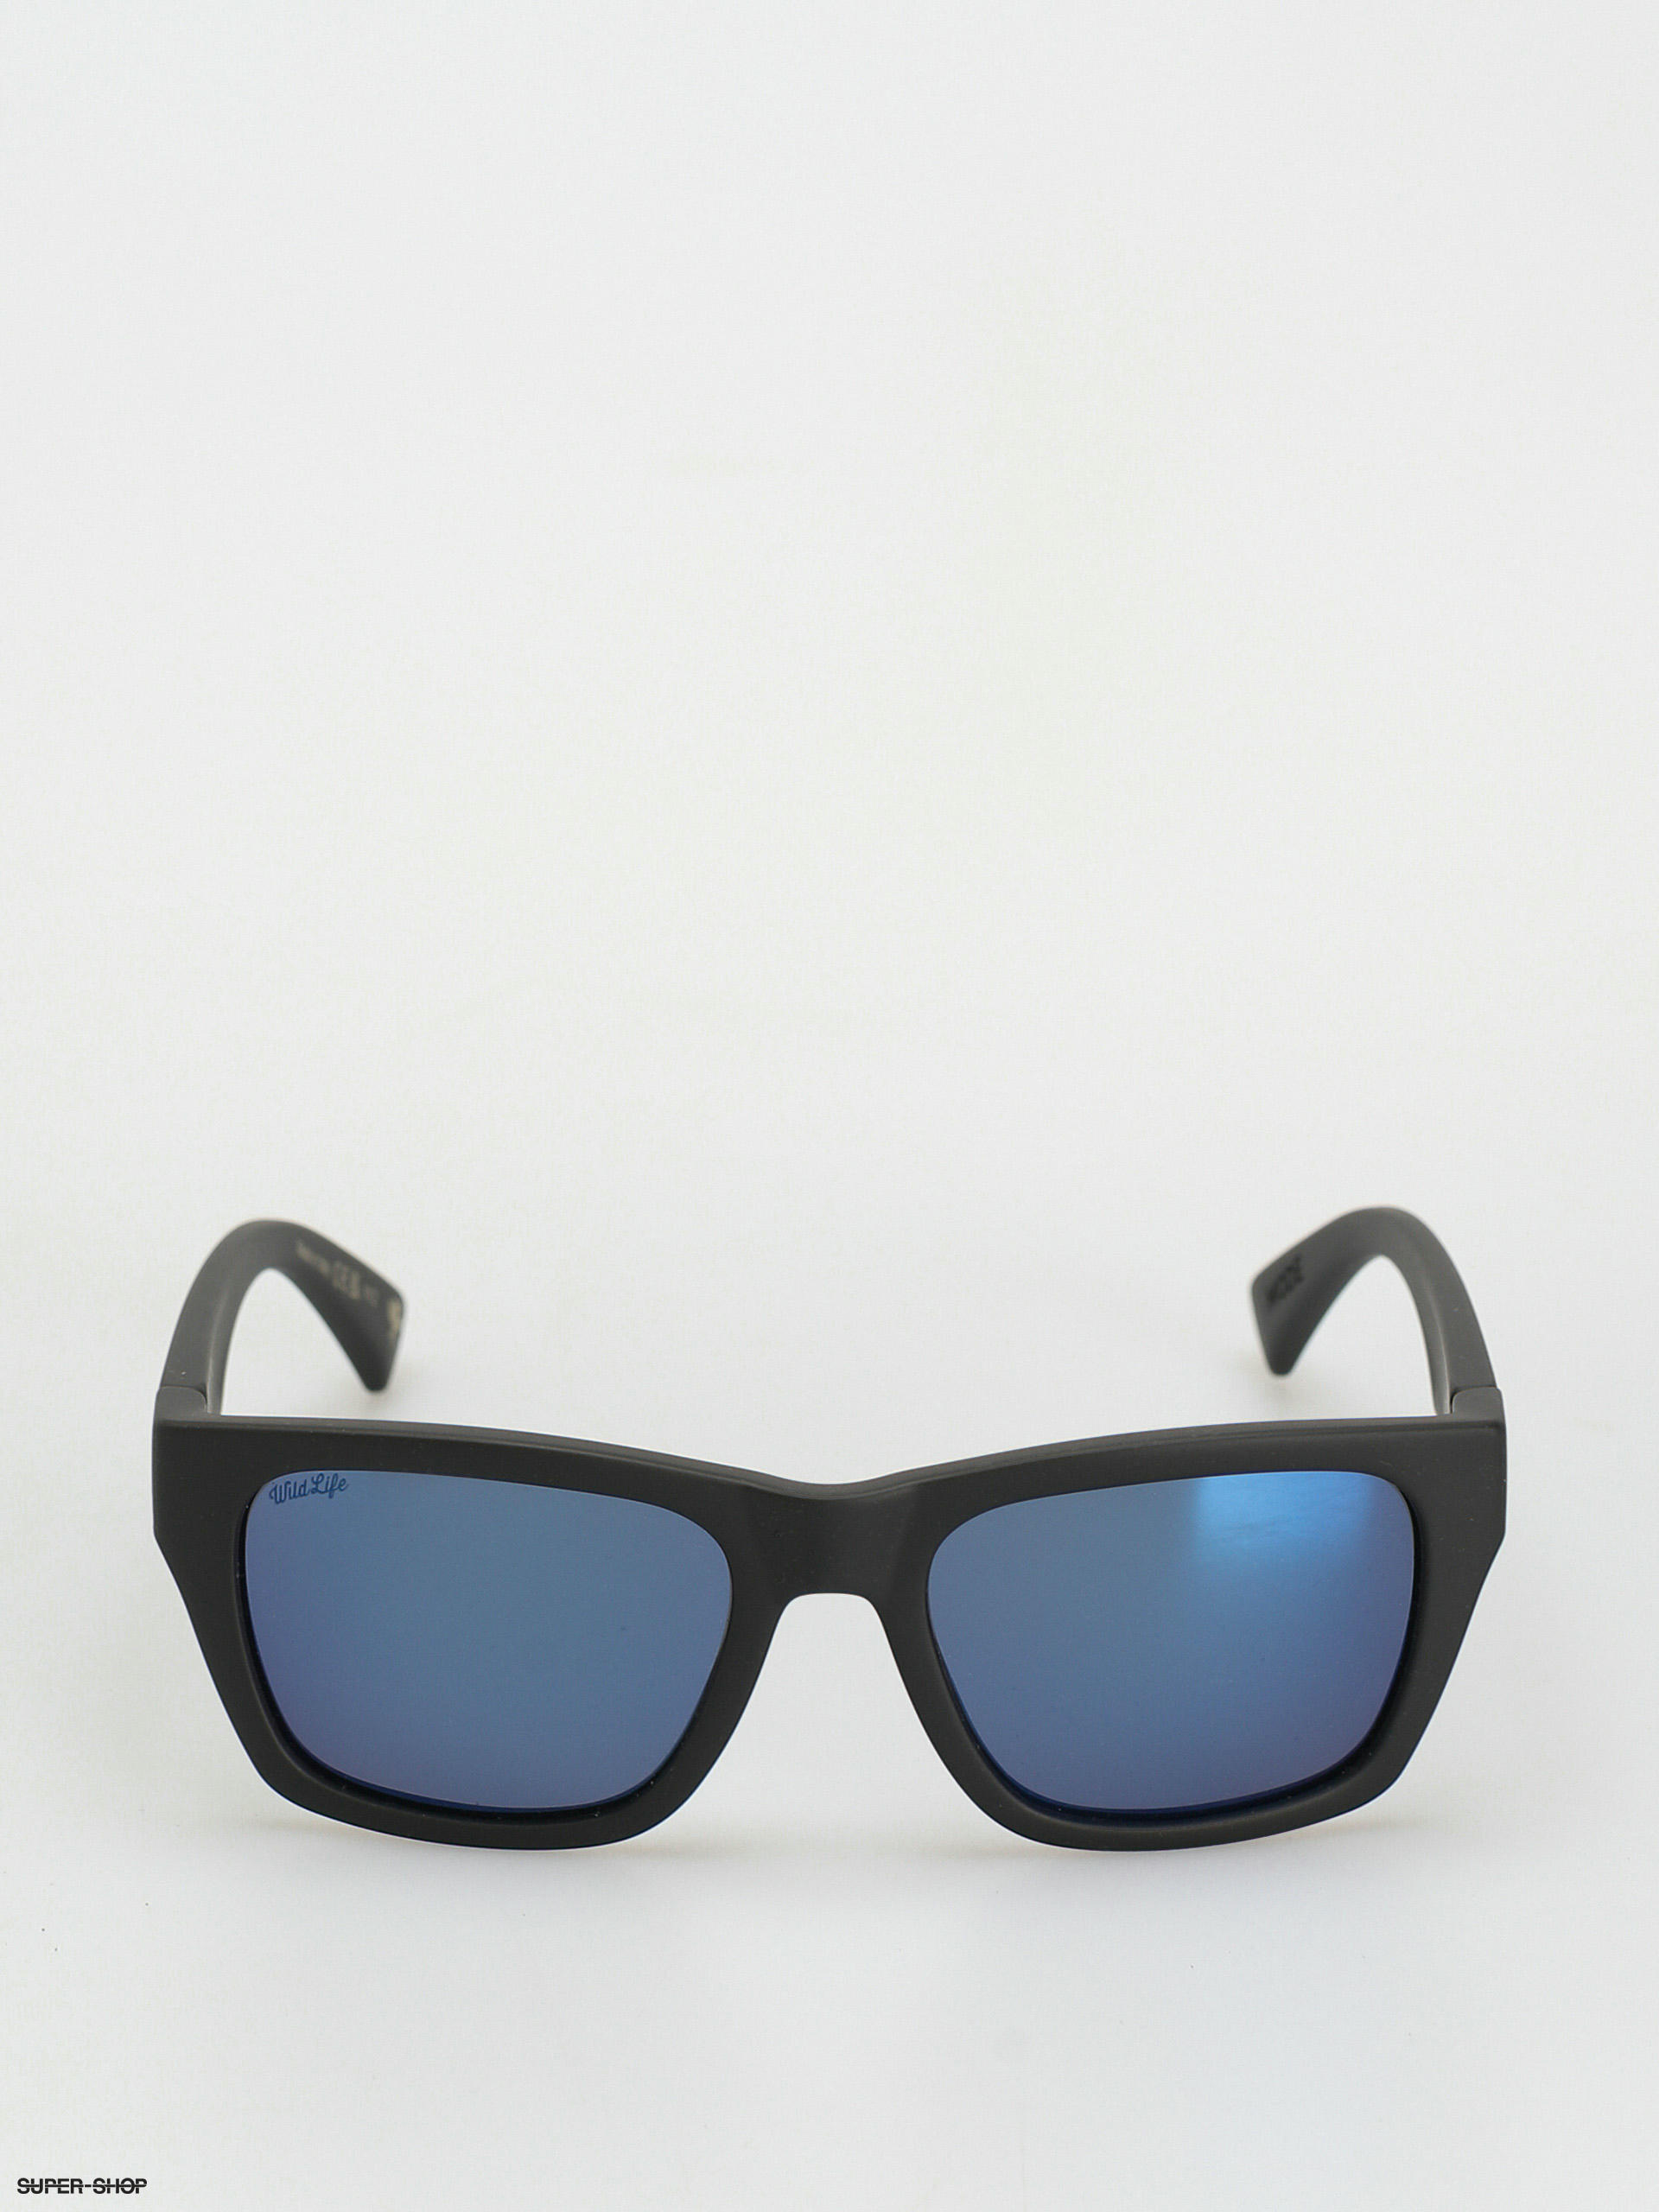 Von Zipper Sunglasses flsh sat/blu (blk Polar Mode plr)